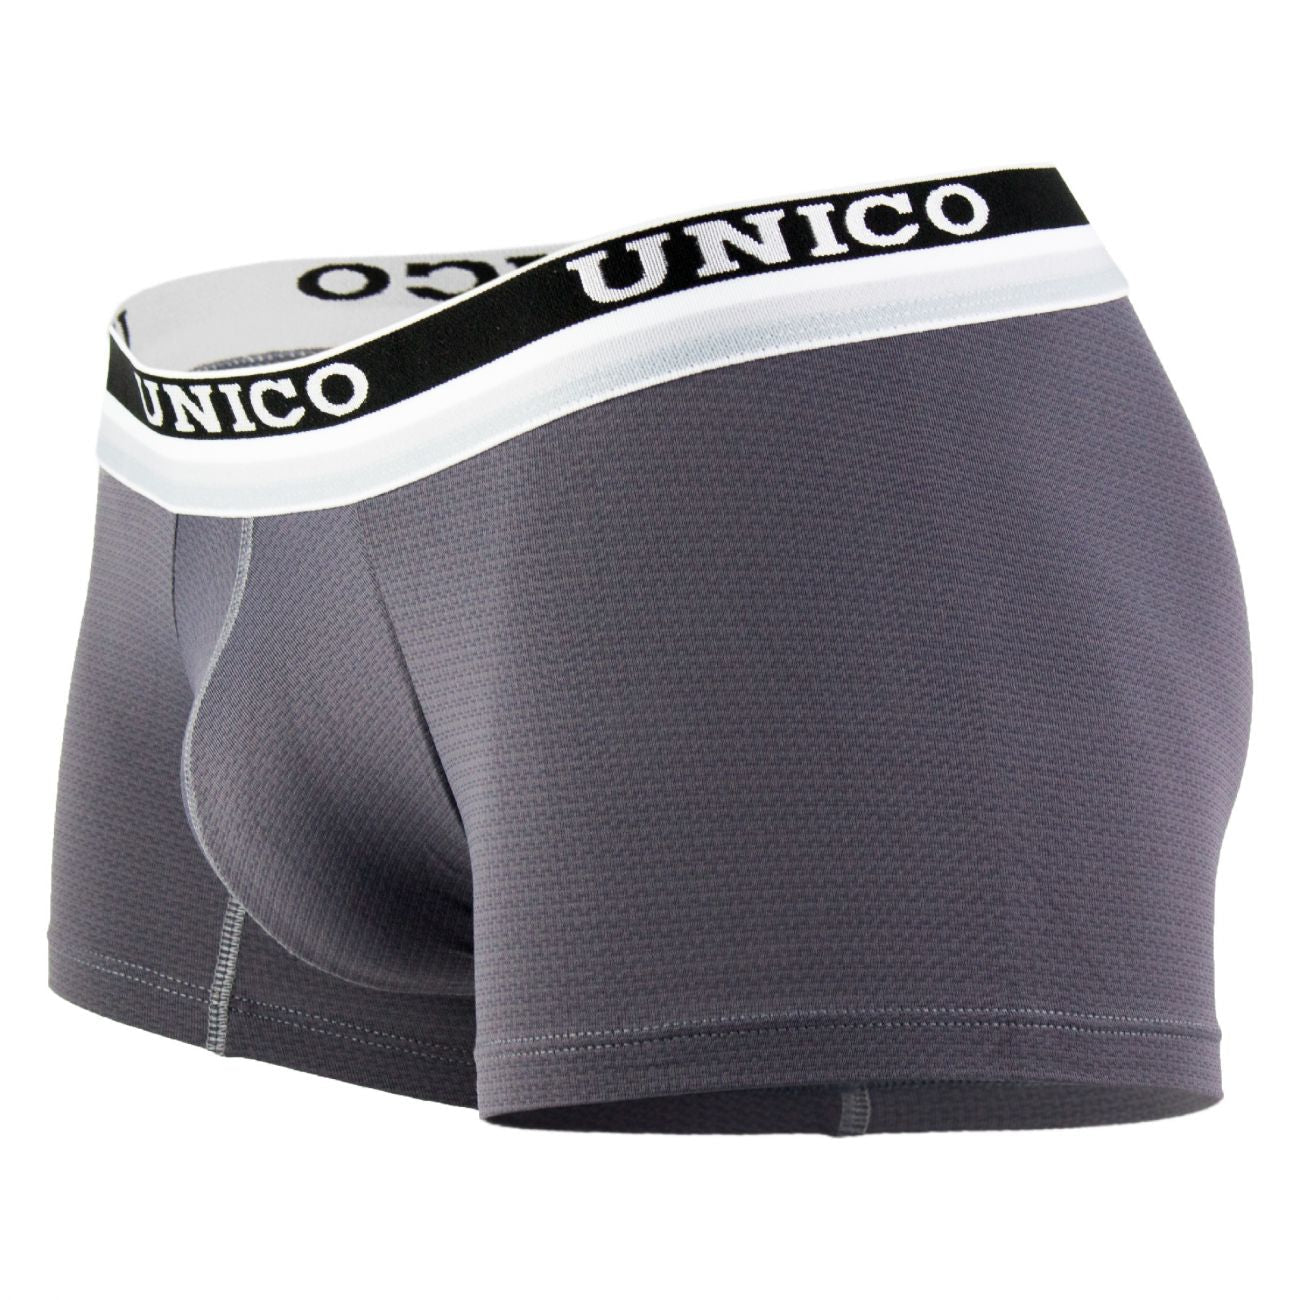 Unico 1802010013196 Boxer Briefs Raiz Color Black